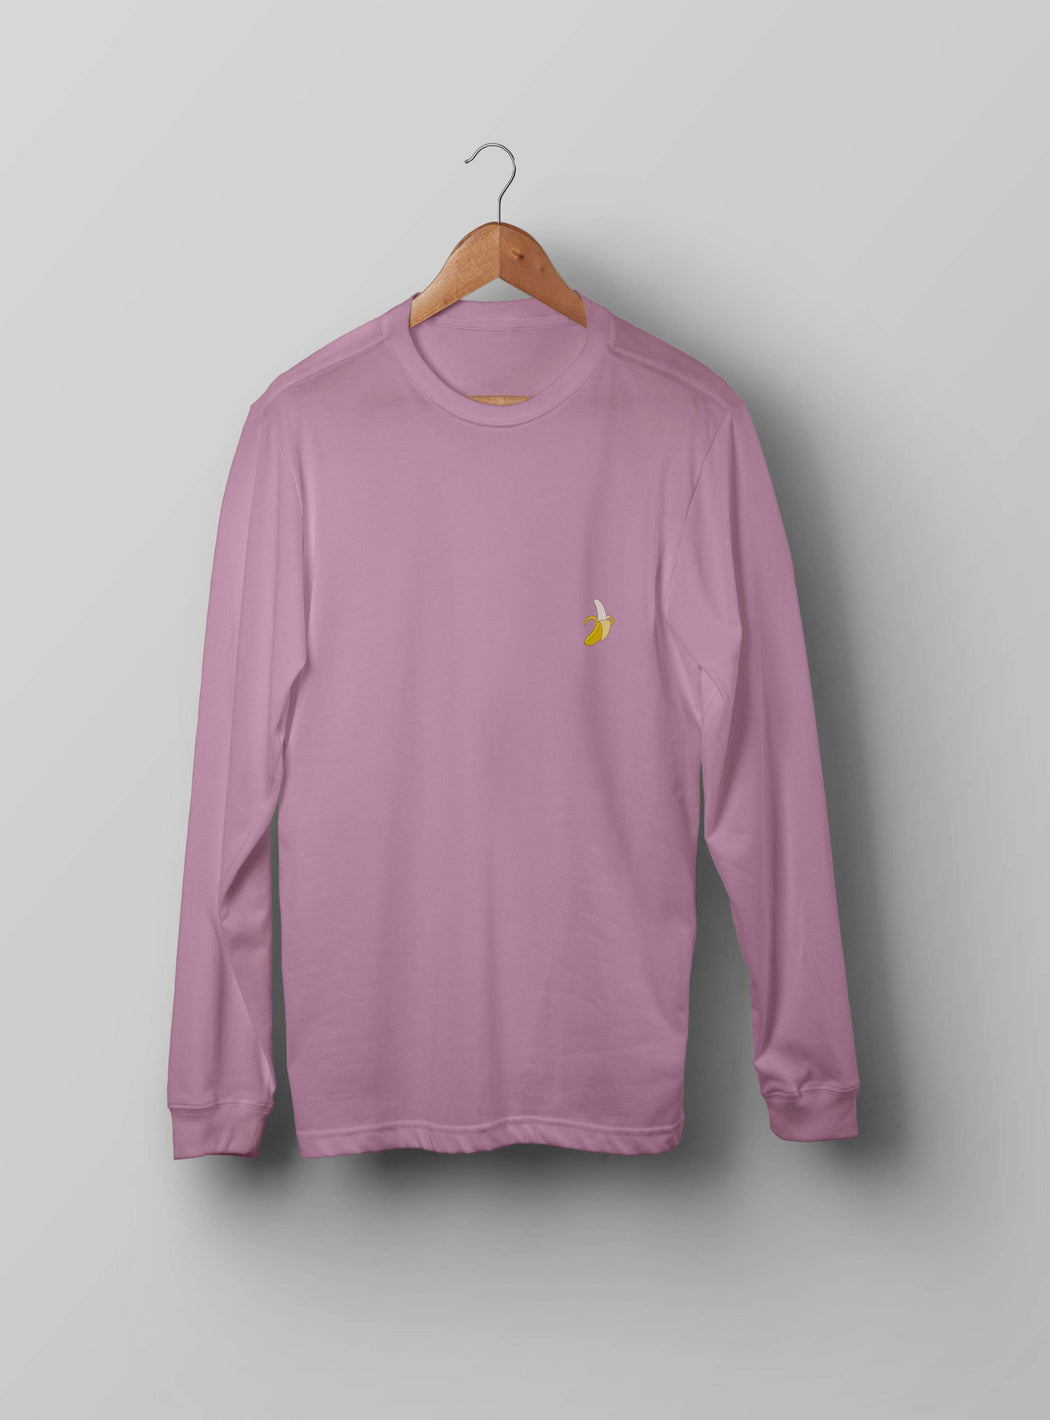 Banana Pink Sweatshirt - Kustom: Tees Factory